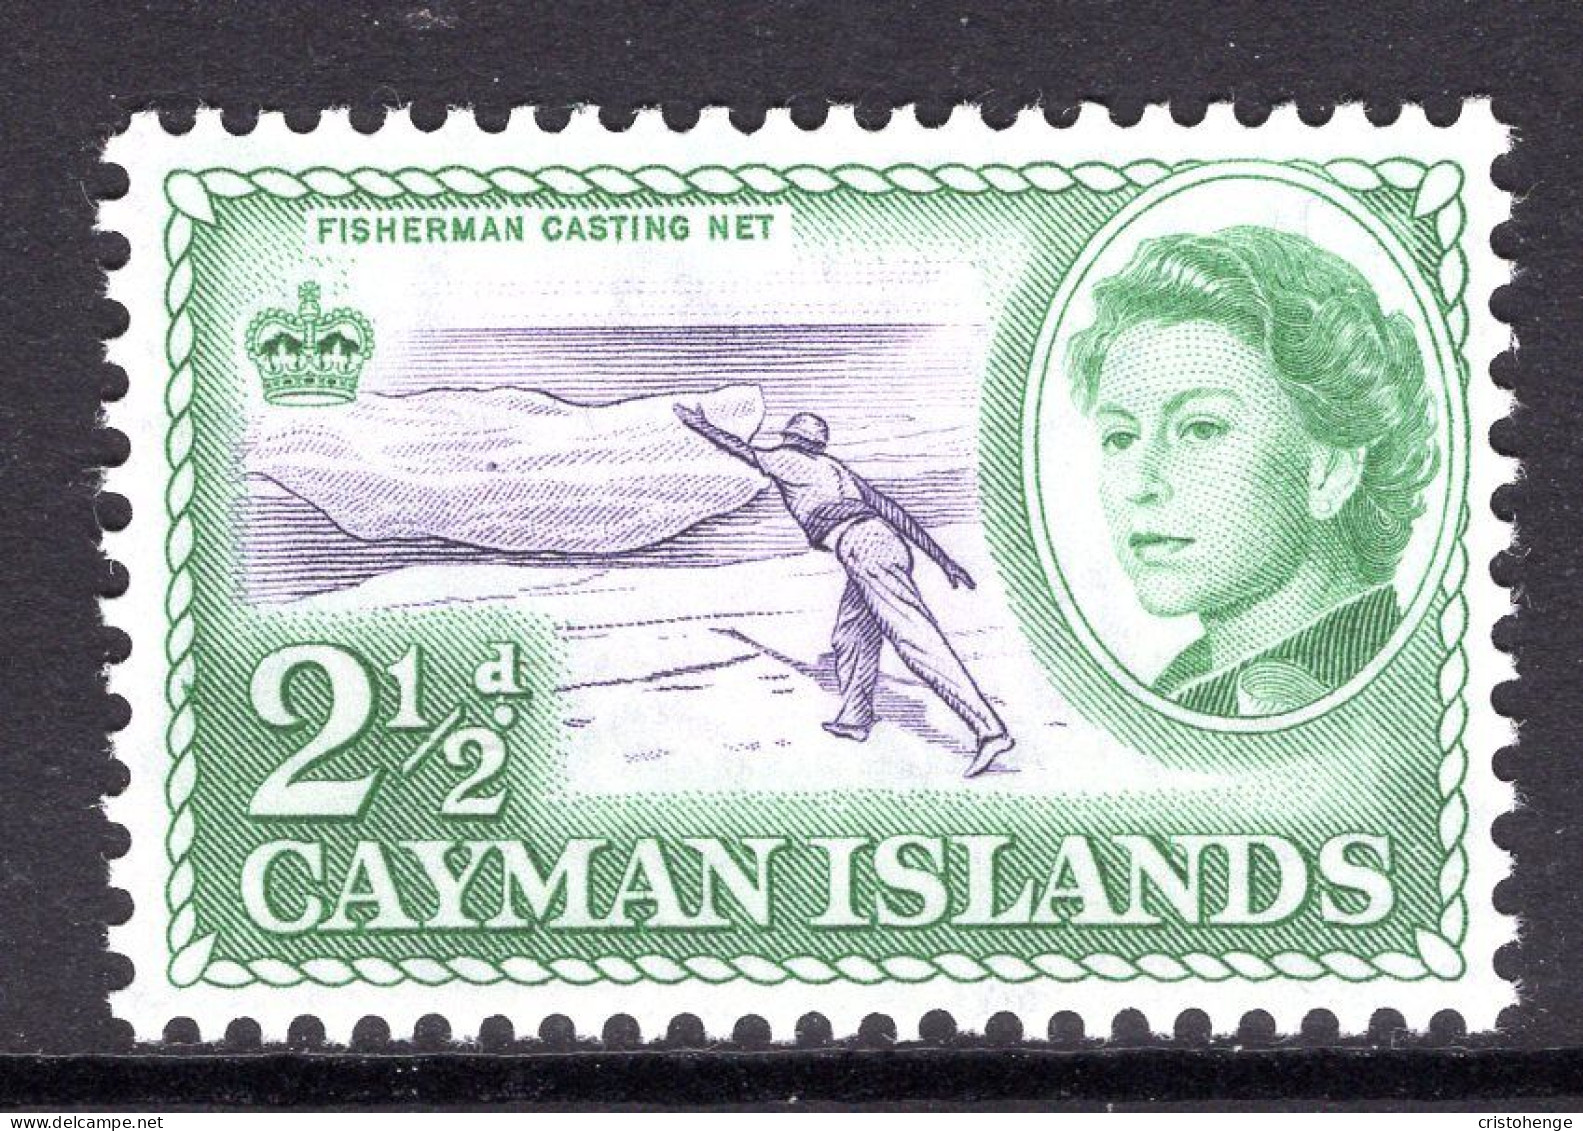 Cayman Islands 1962-64 Pictorials - 2½d Fisherman Casting Net MNH (SG 169) - Cayman Islands